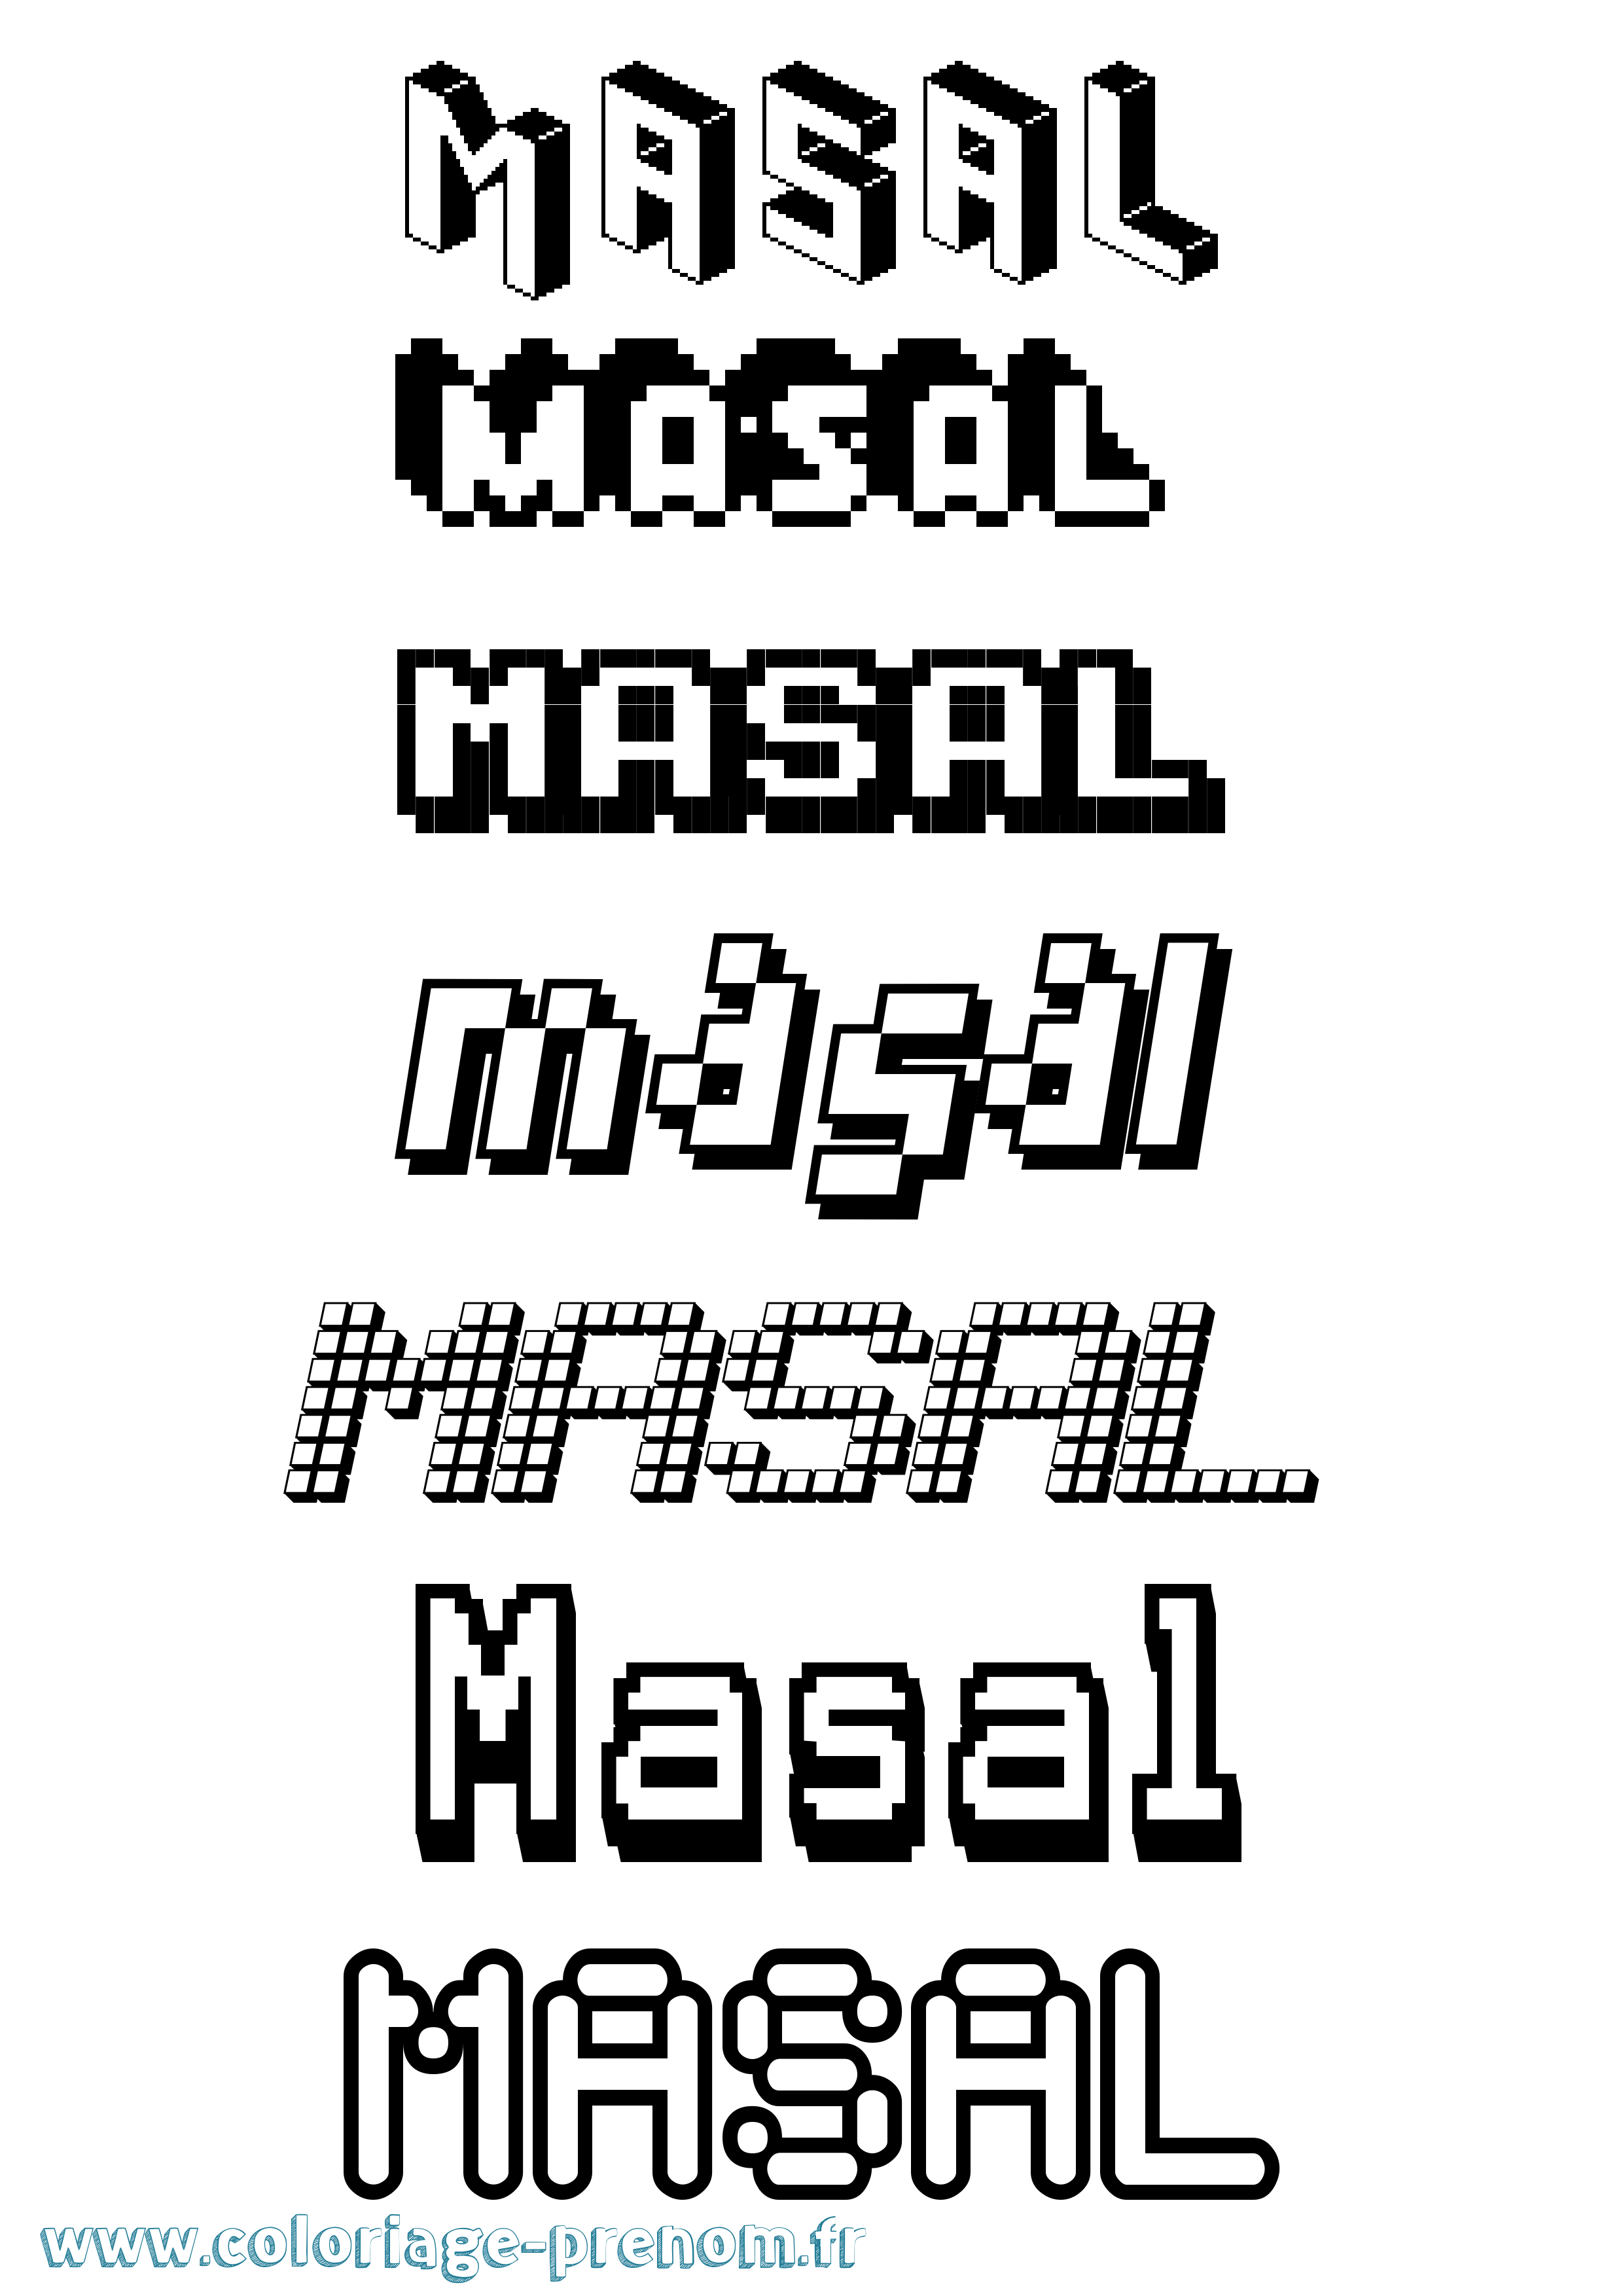 Coloriage prénom Masal Pixel